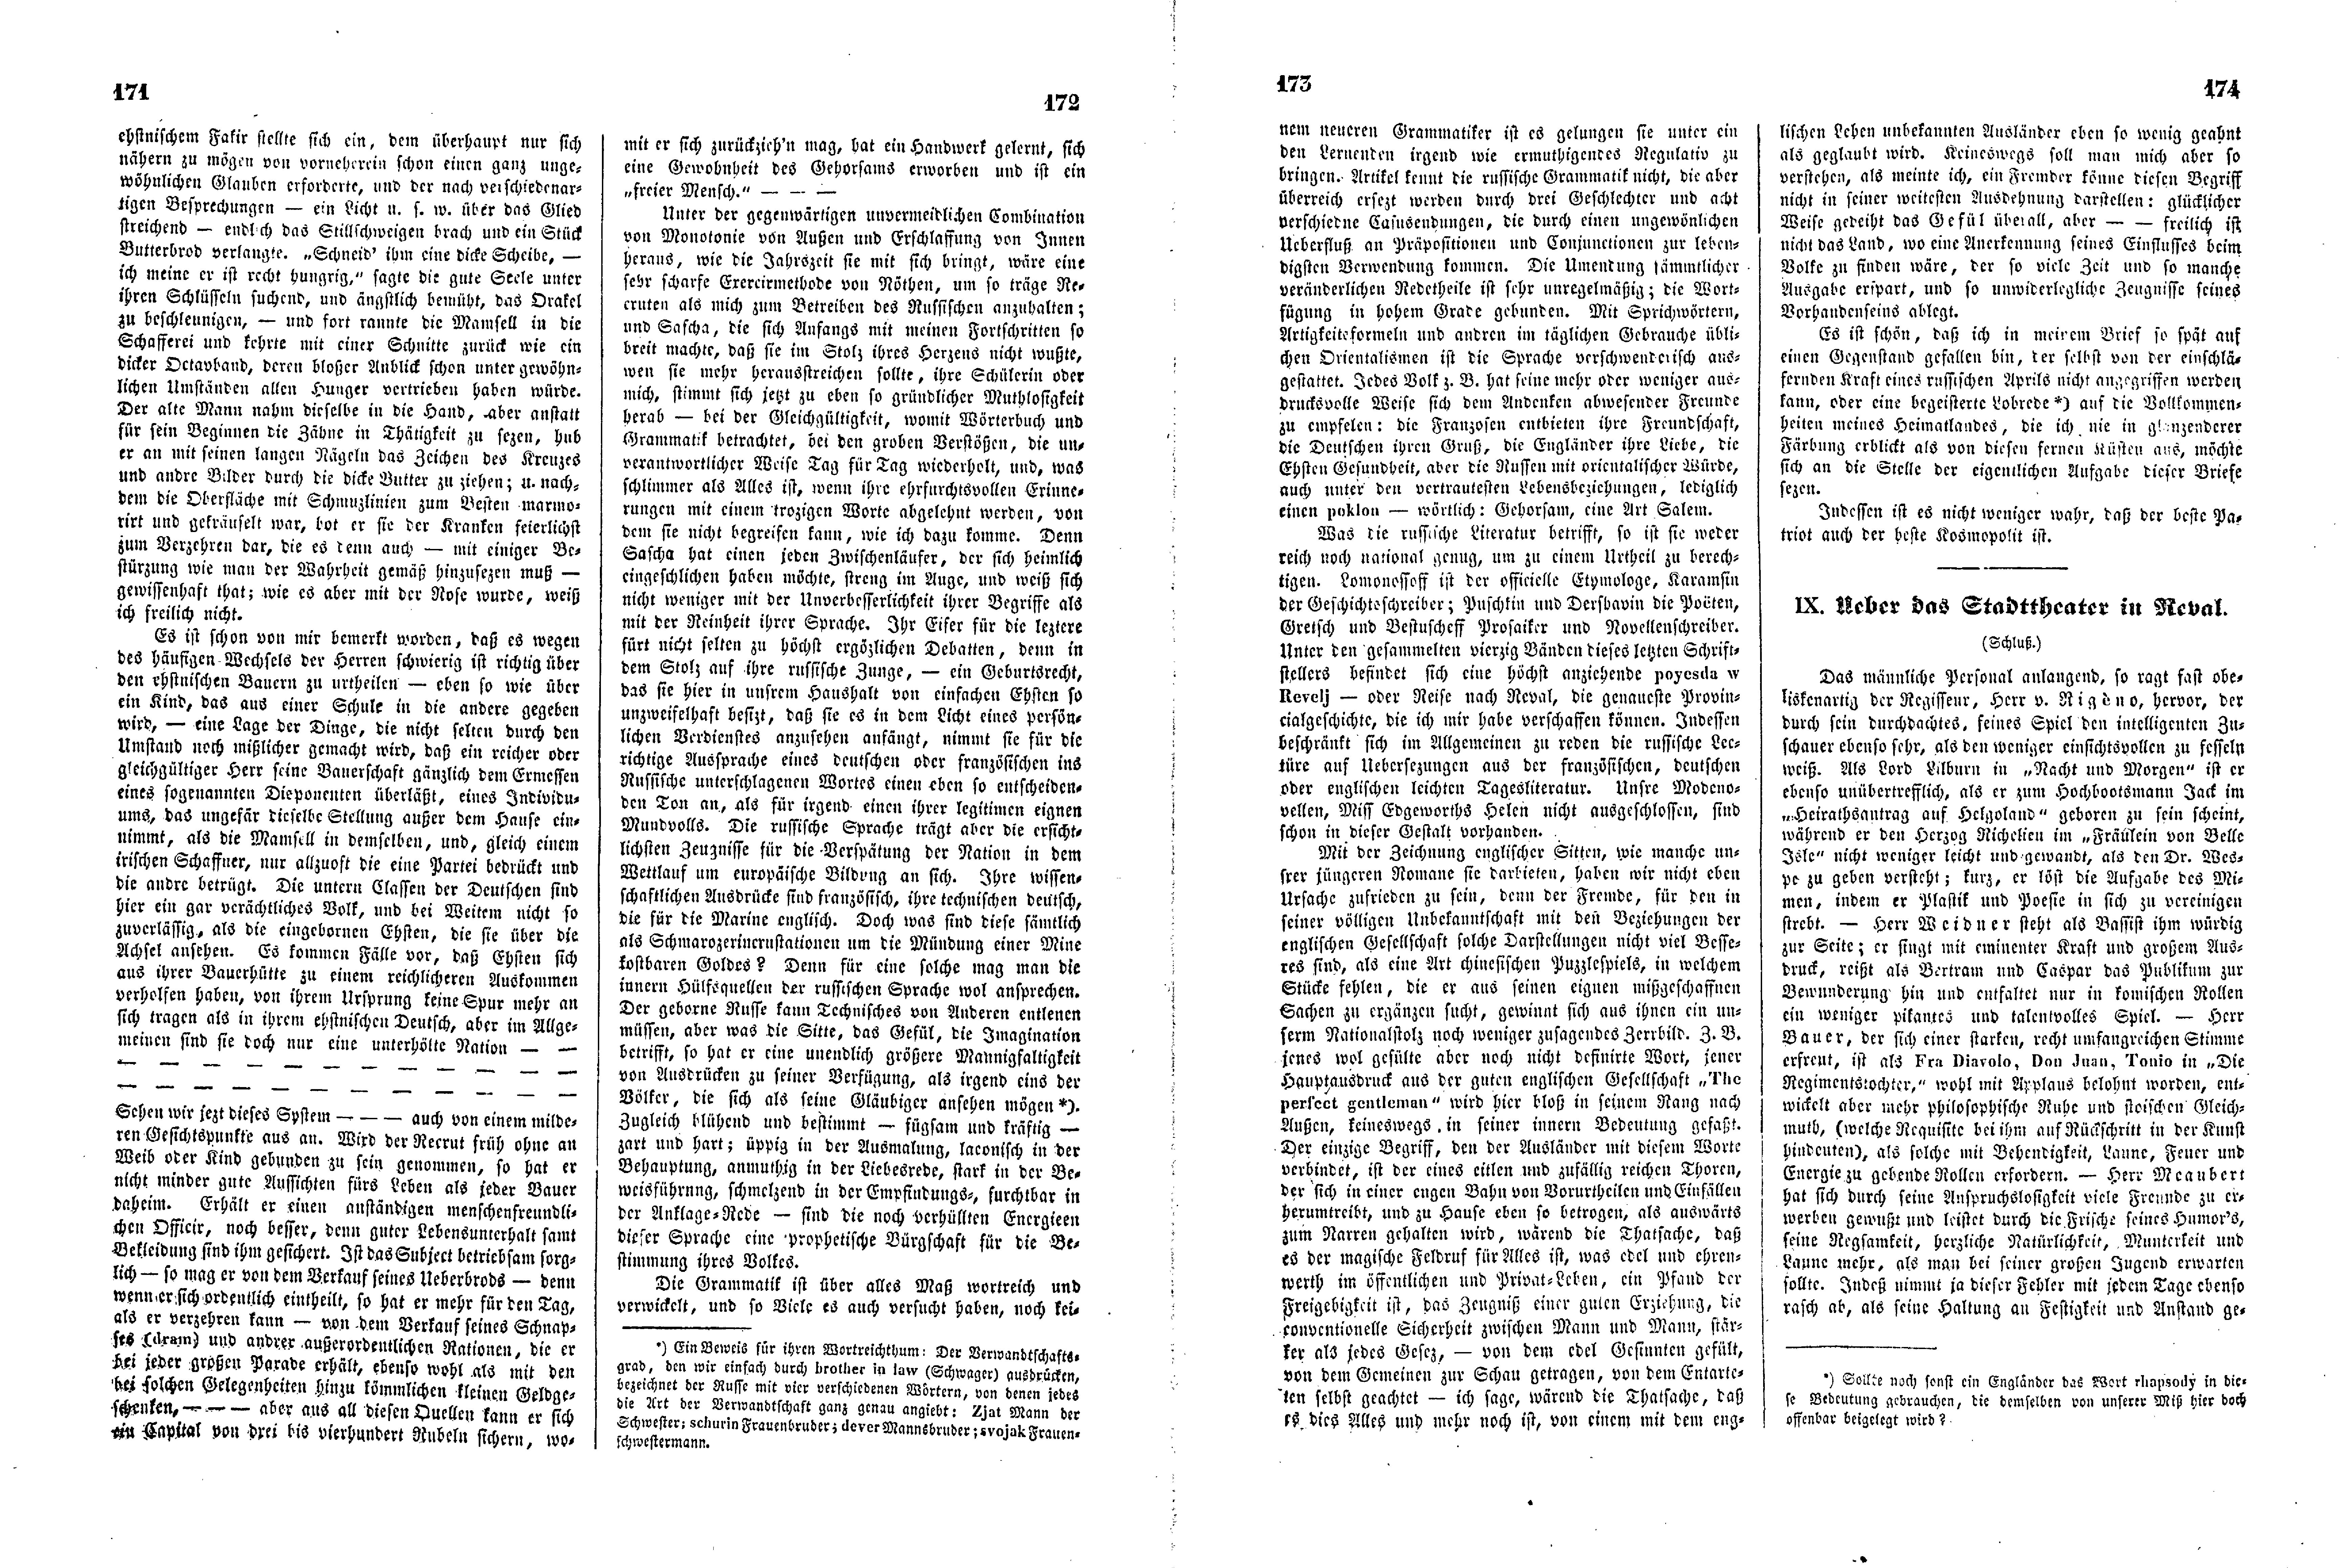 Das Inland [11] (1846) | 48. (171-174) Main body of text